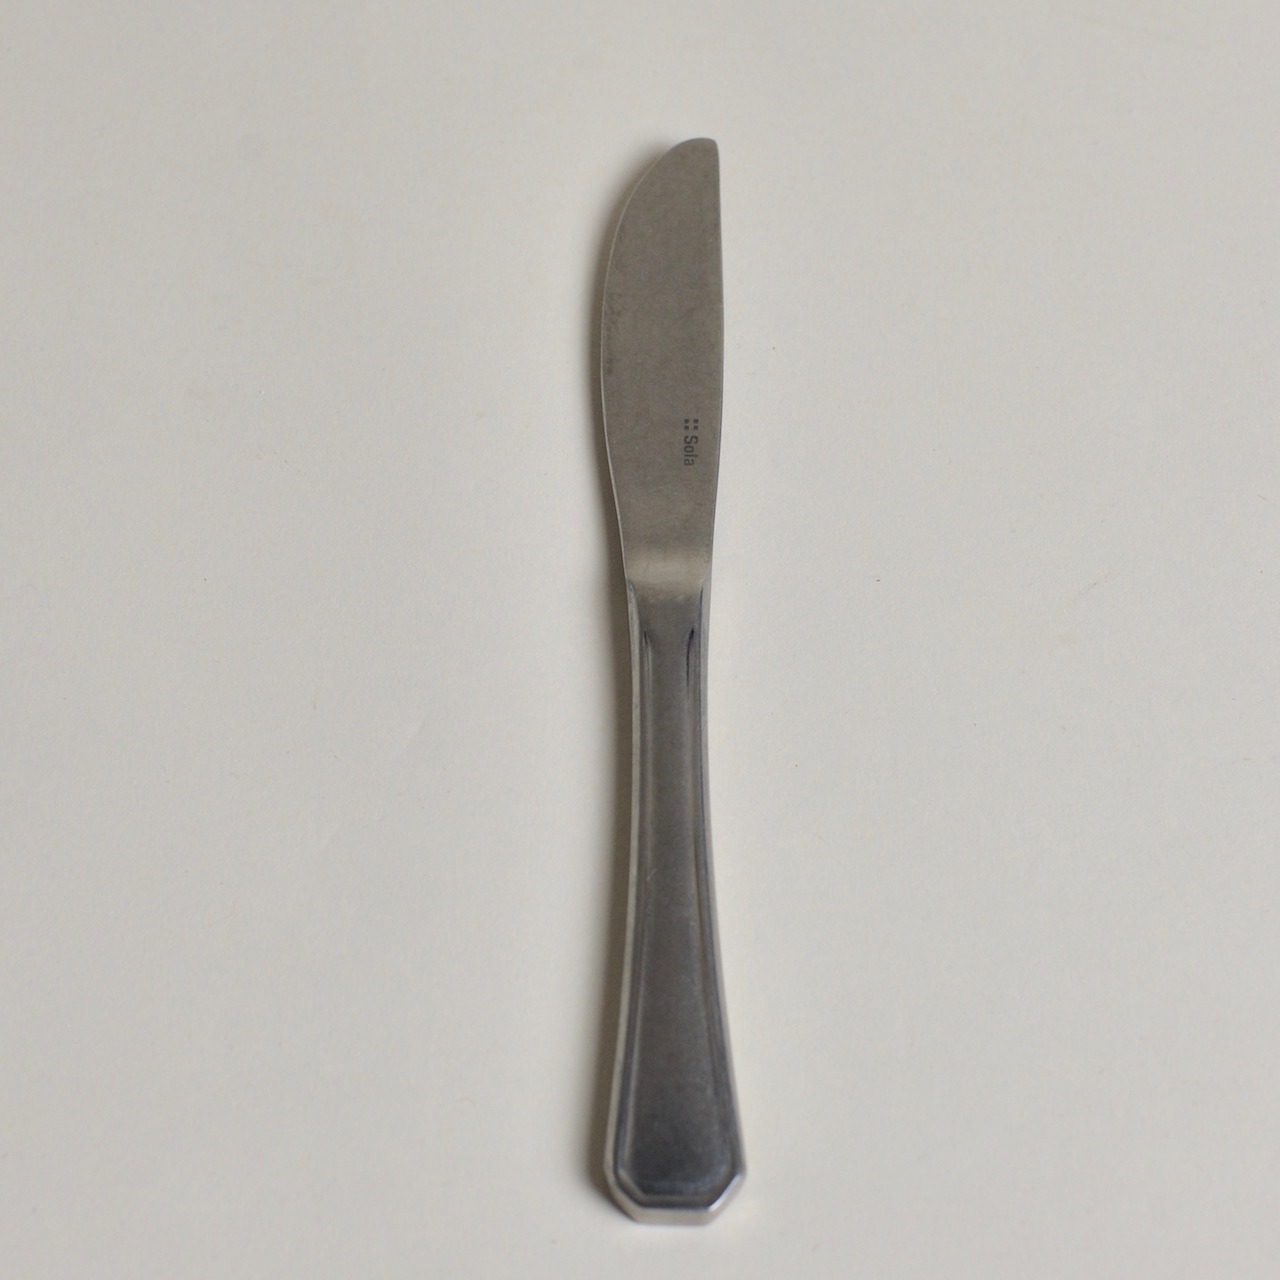 OSLO  TABLE KNIFE / オスロ テーブル ナイフ〈食器 / カトラリー 〉